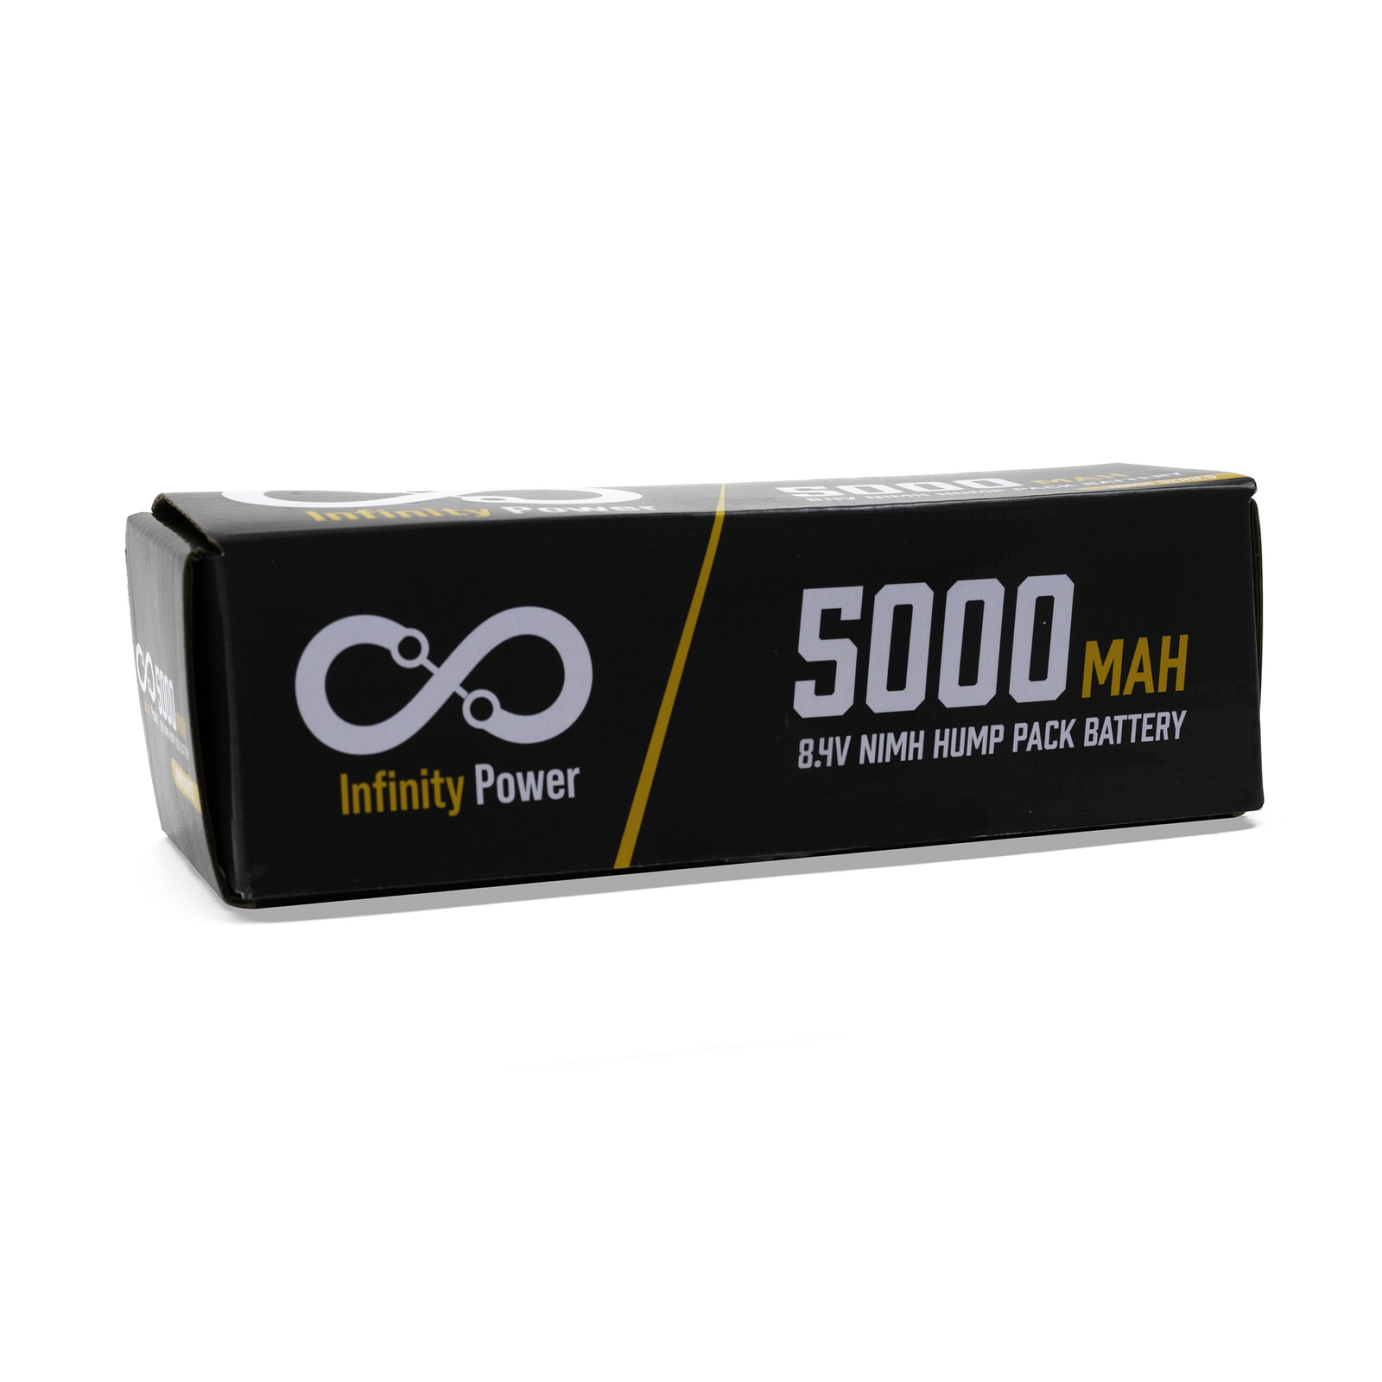 5000mAh NiMH 8.4V Infinity Power Battery Hump Pack (Traxxas)